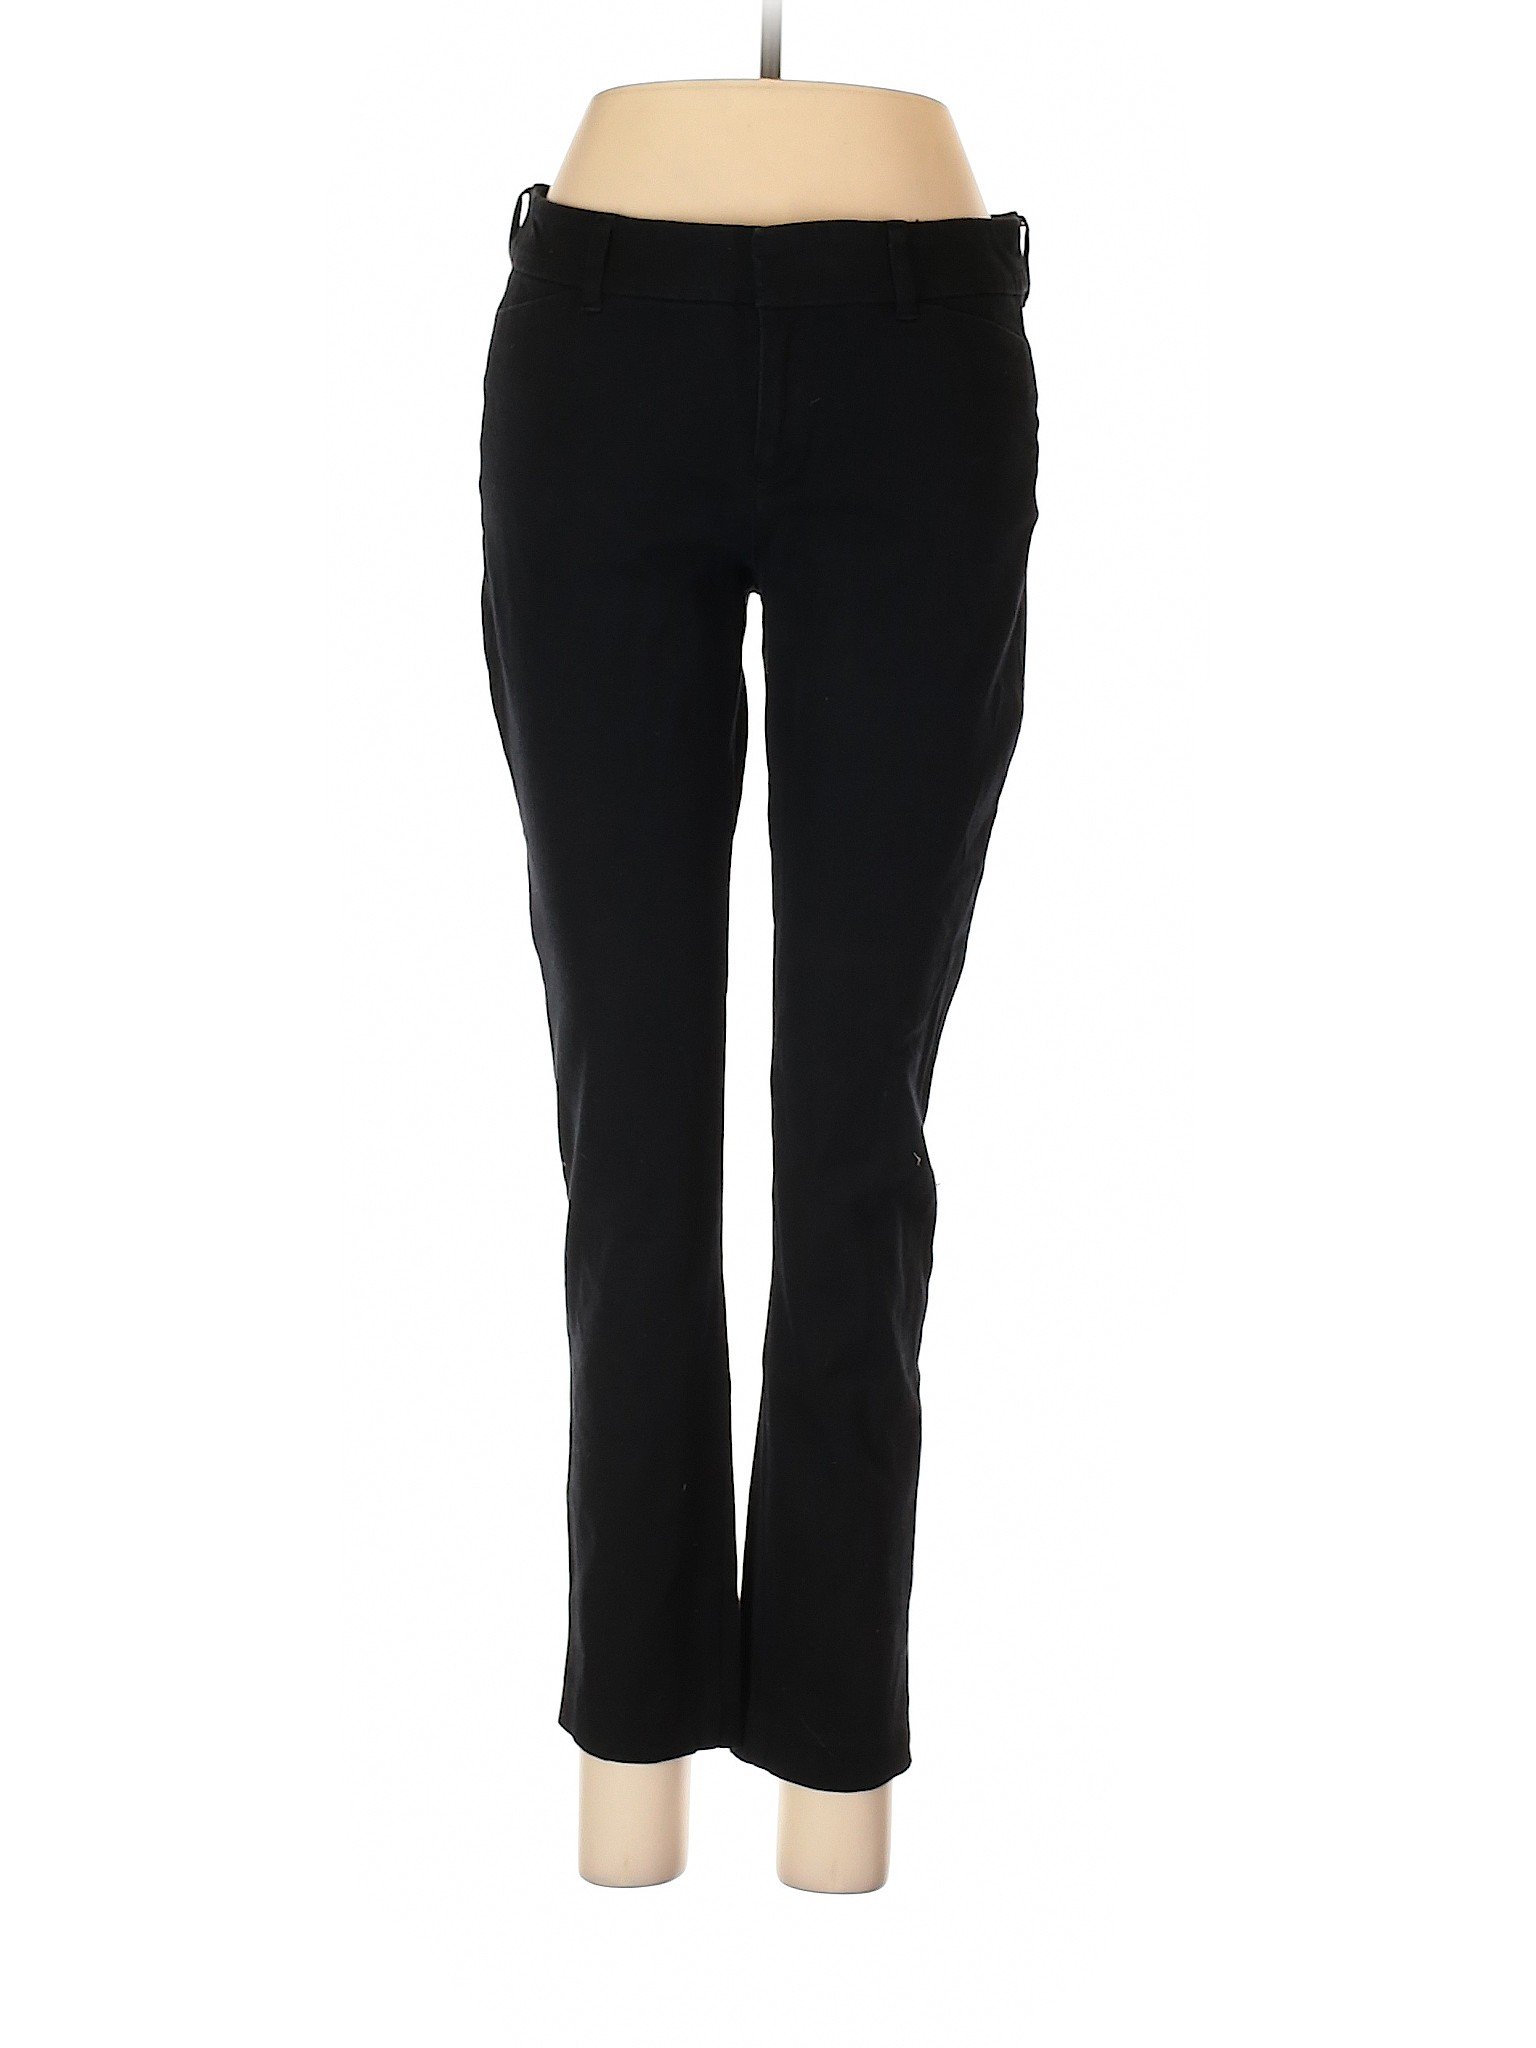 Old Navy Women Black Casual Pants 6 | eBay